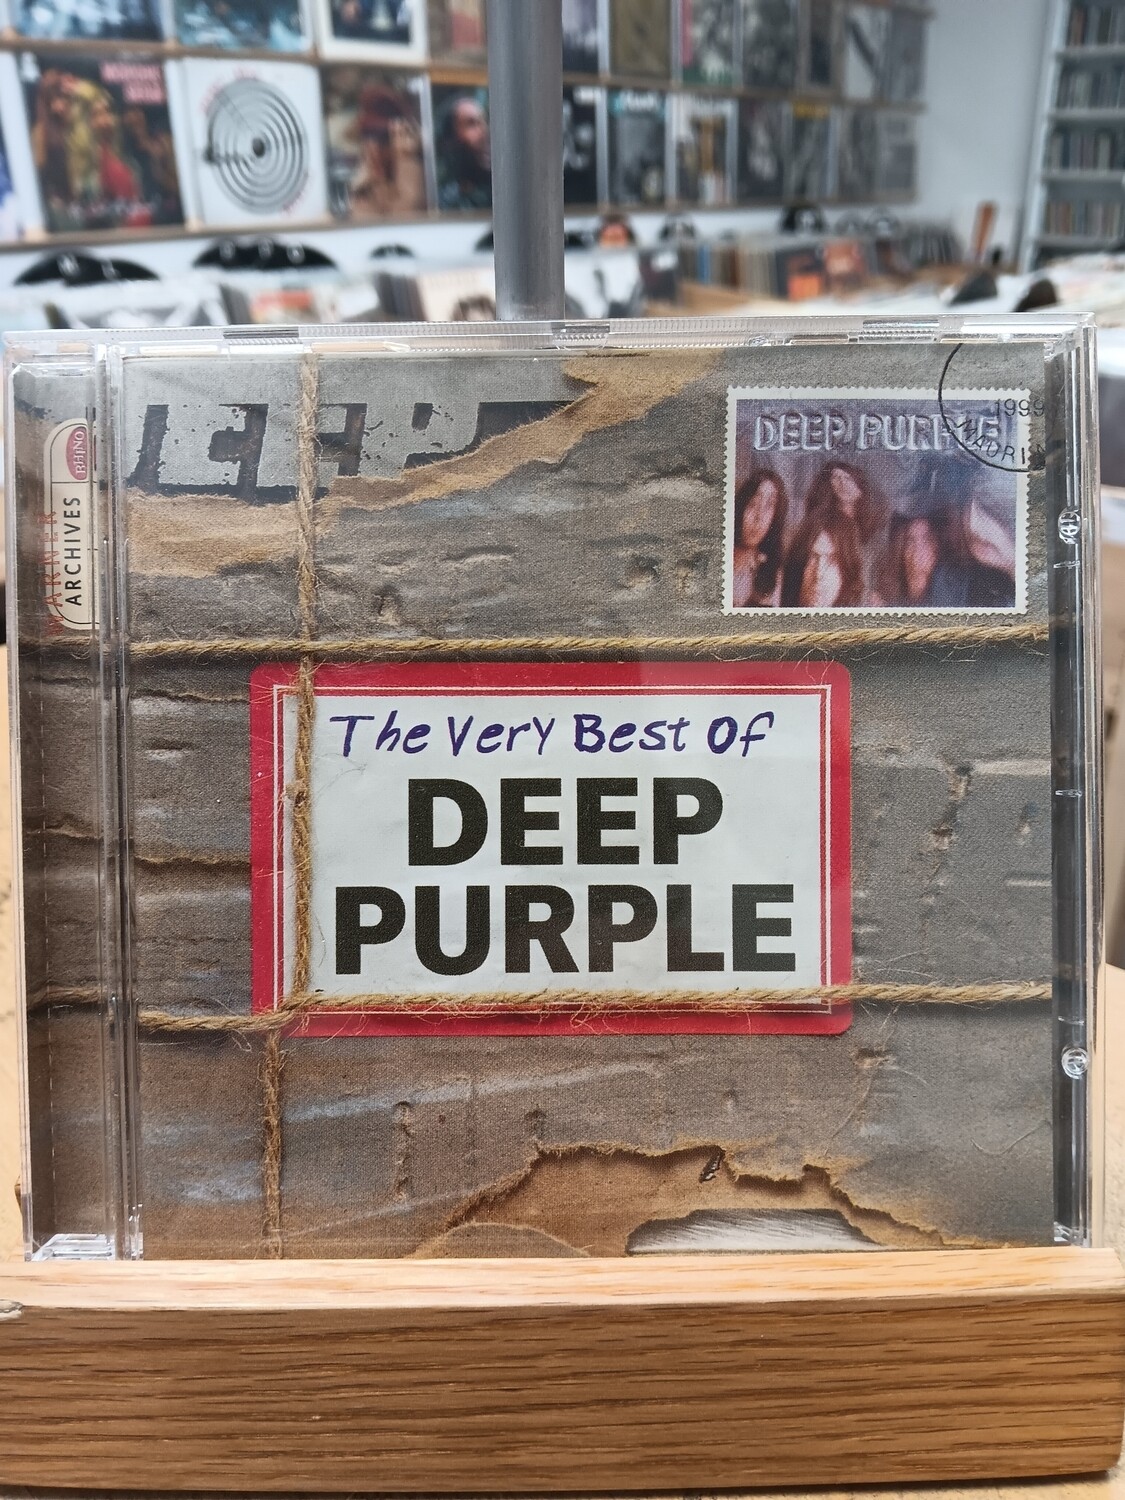 DEEP PURPLE - The Very Best of Deep Purple (CD)